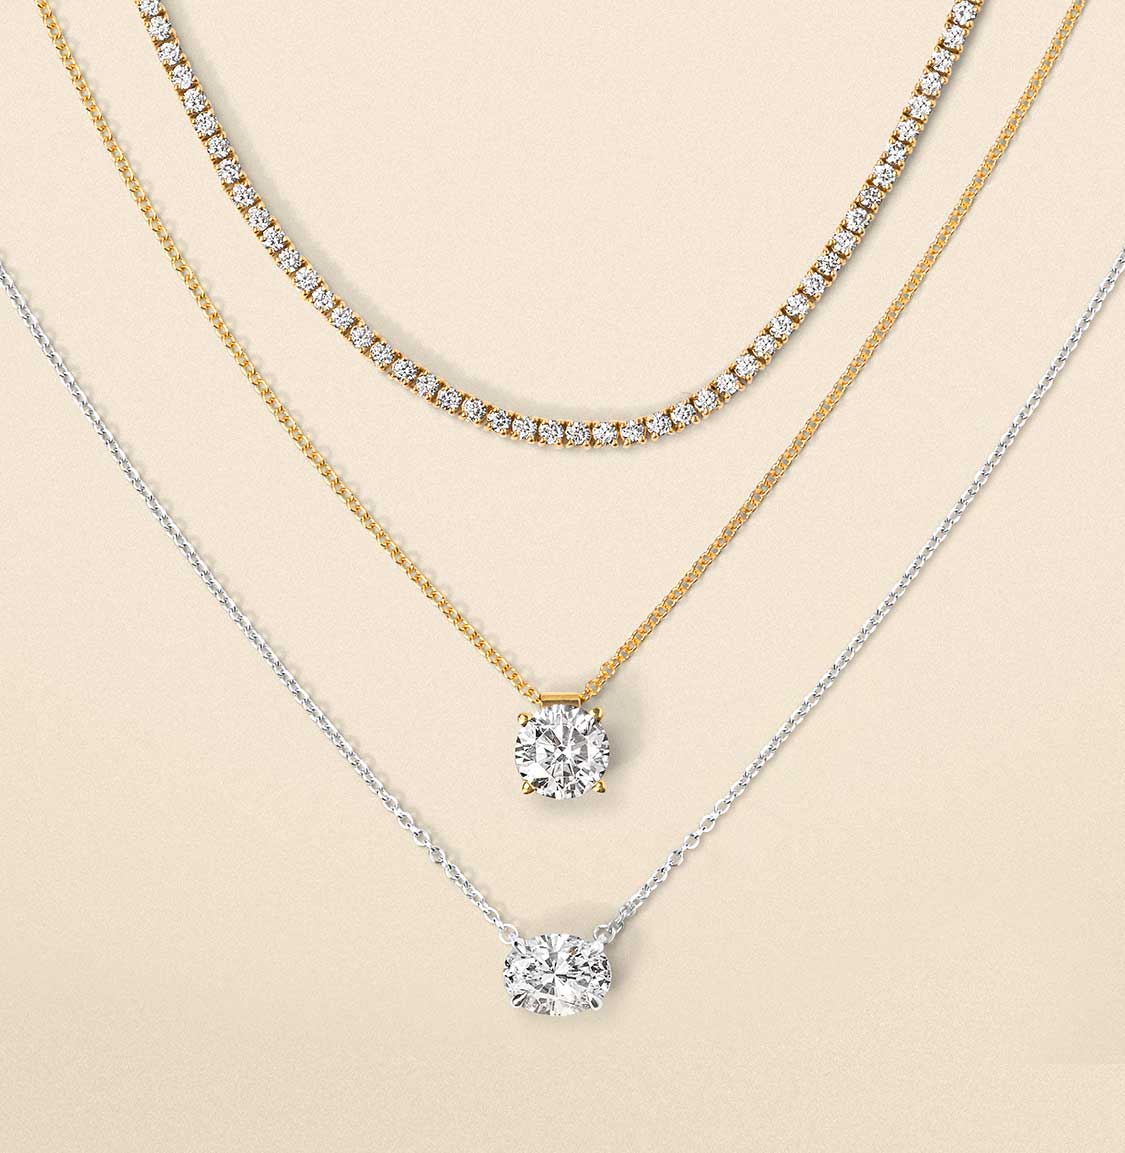 Assortment of customizable diamond necklaces